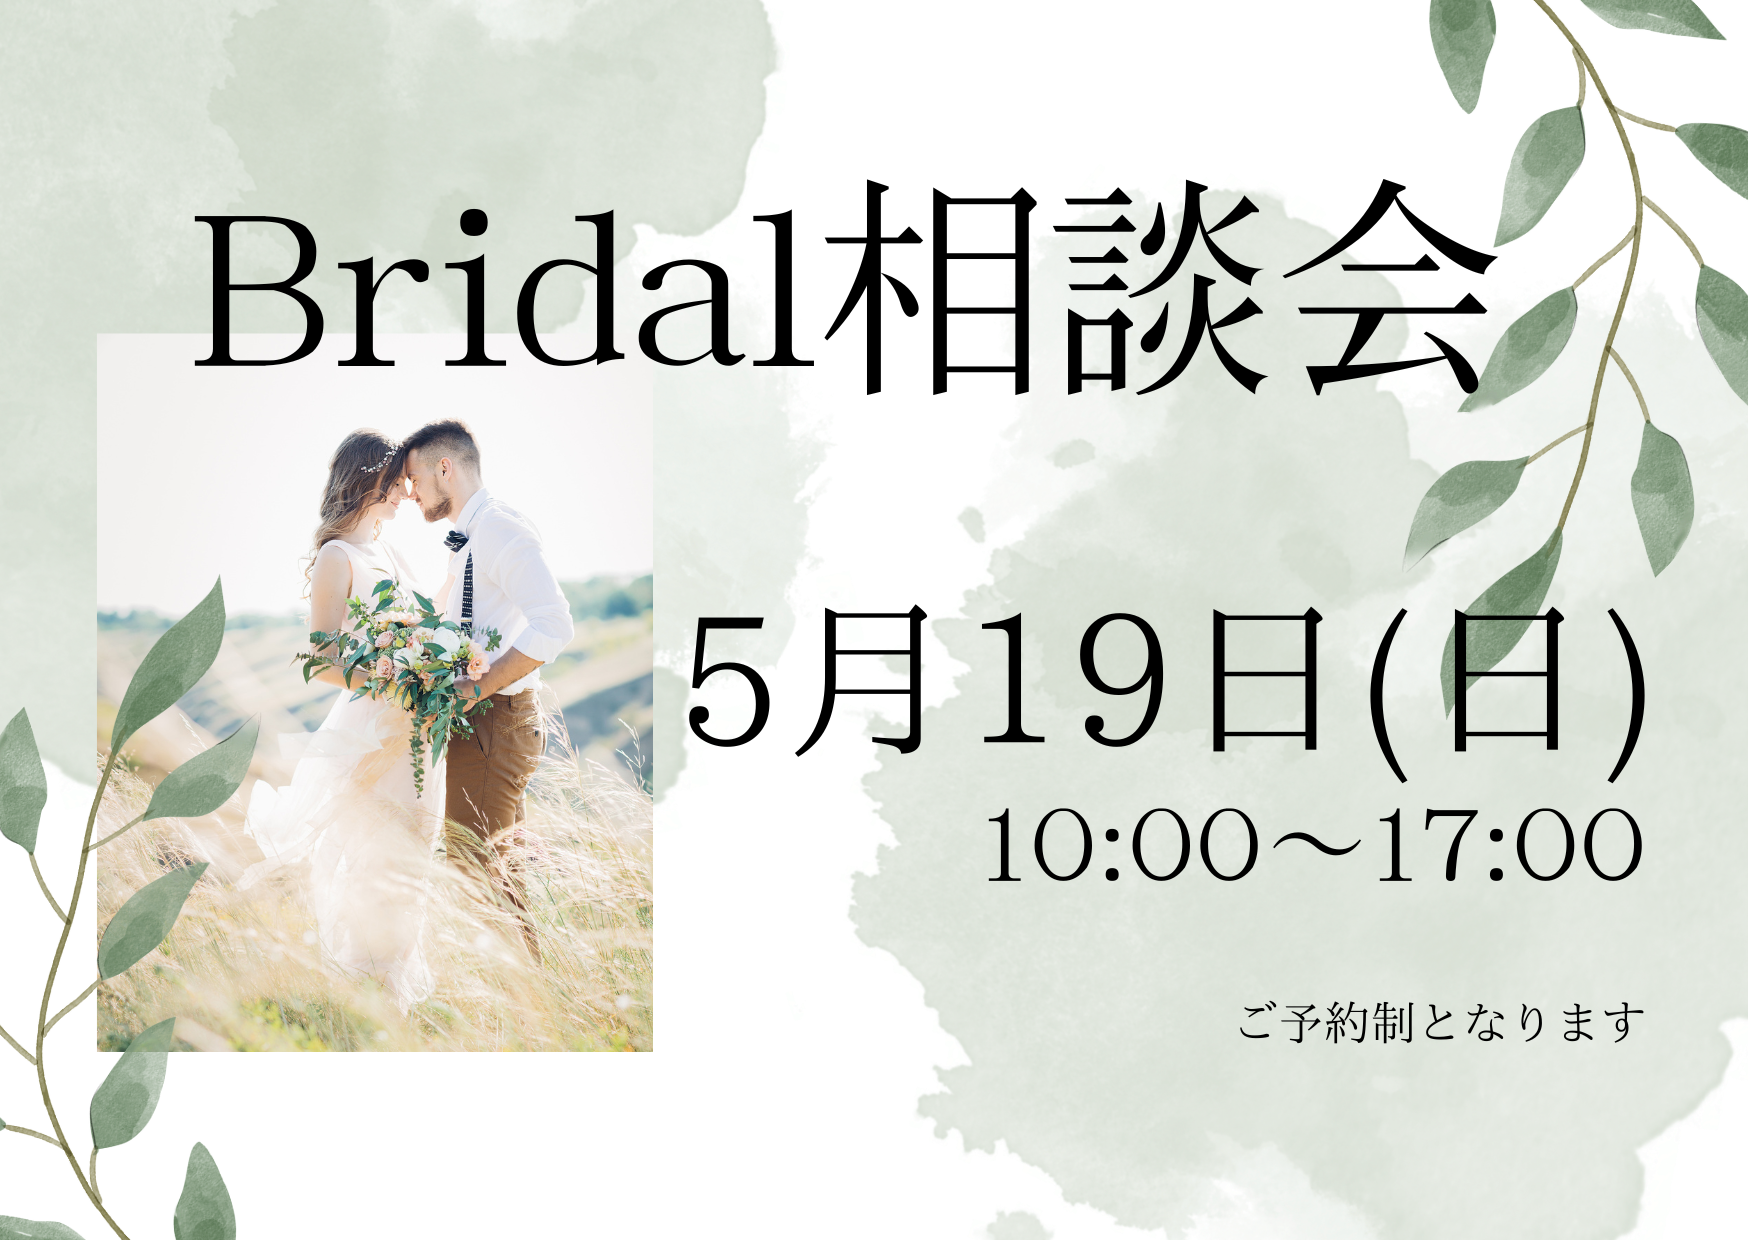 Bridal相談会【5/19(日)】